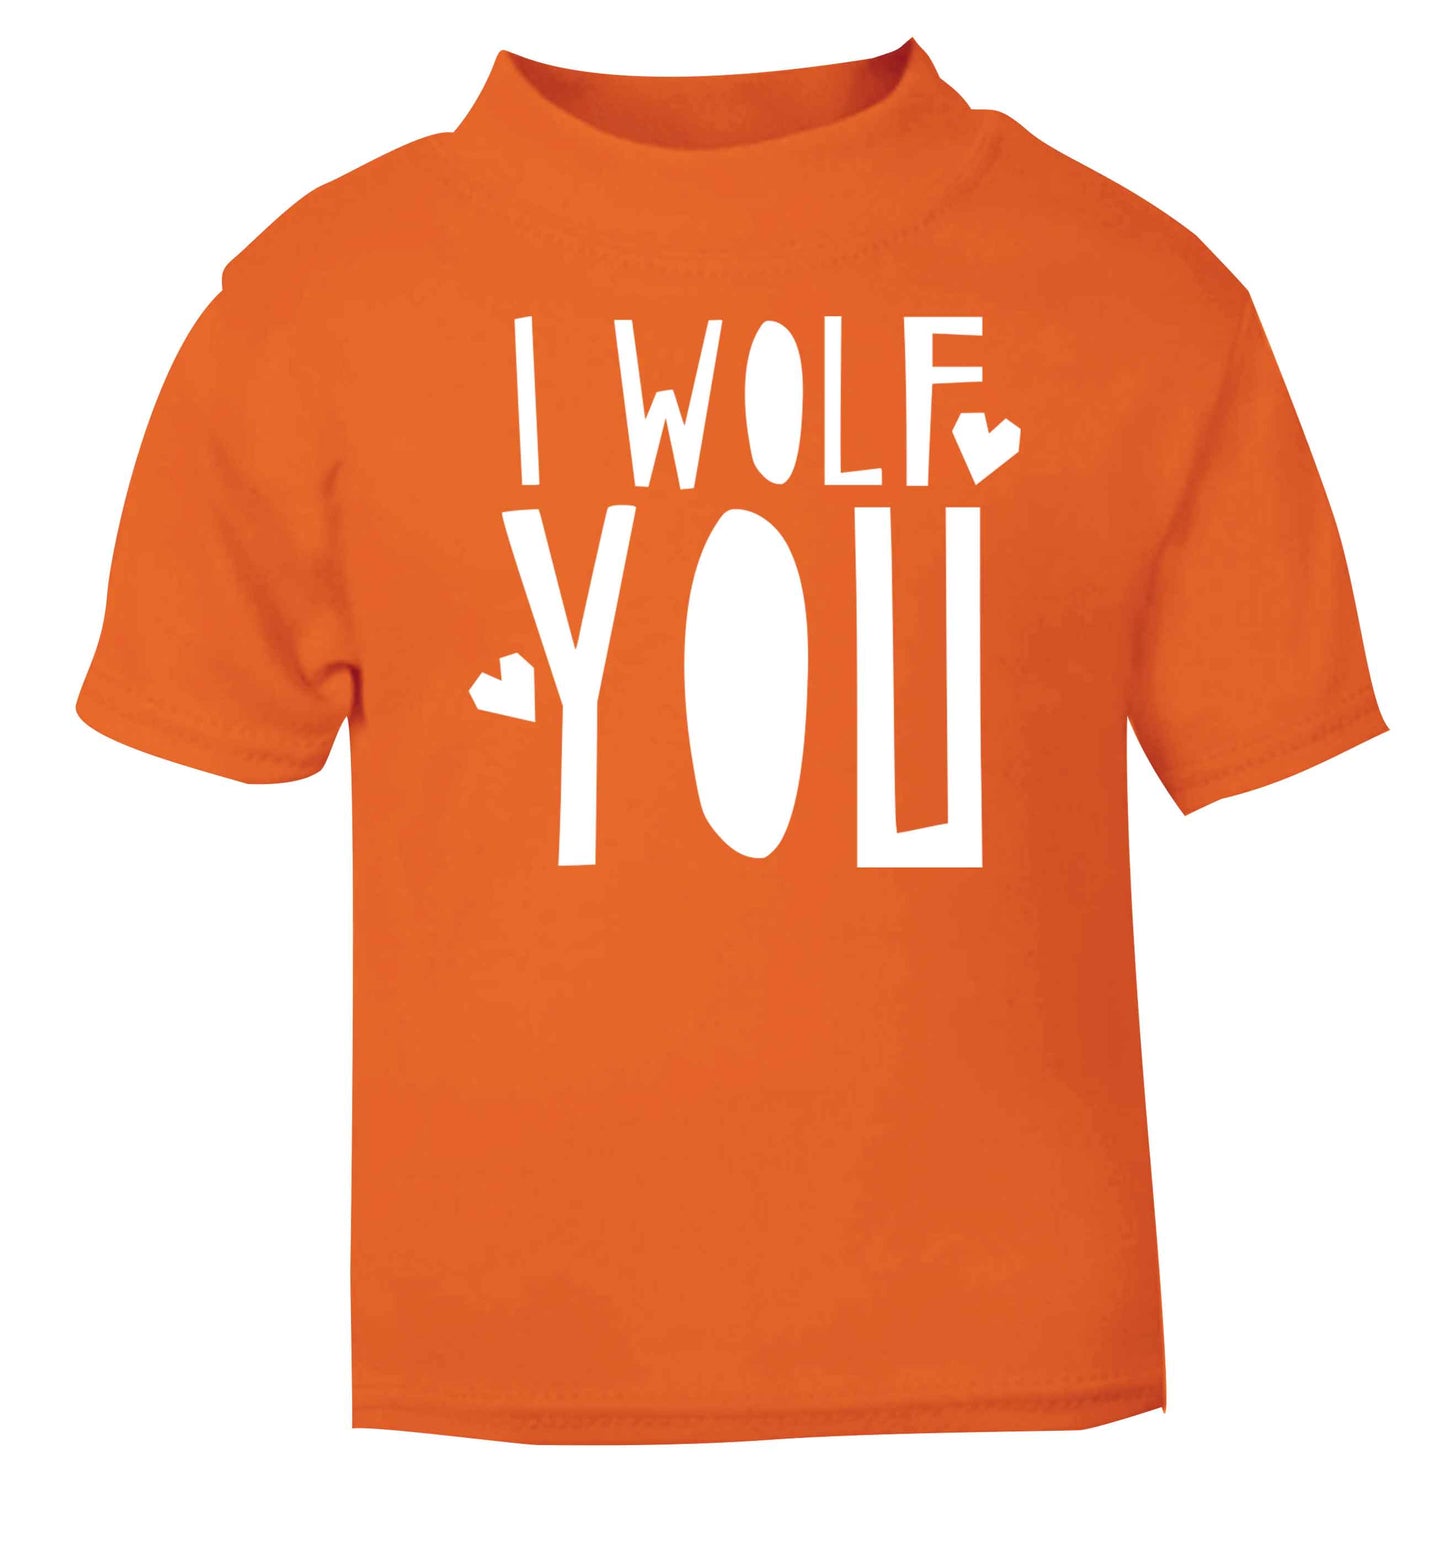 I wolf you orange baby toddler Tshirt 2 Years